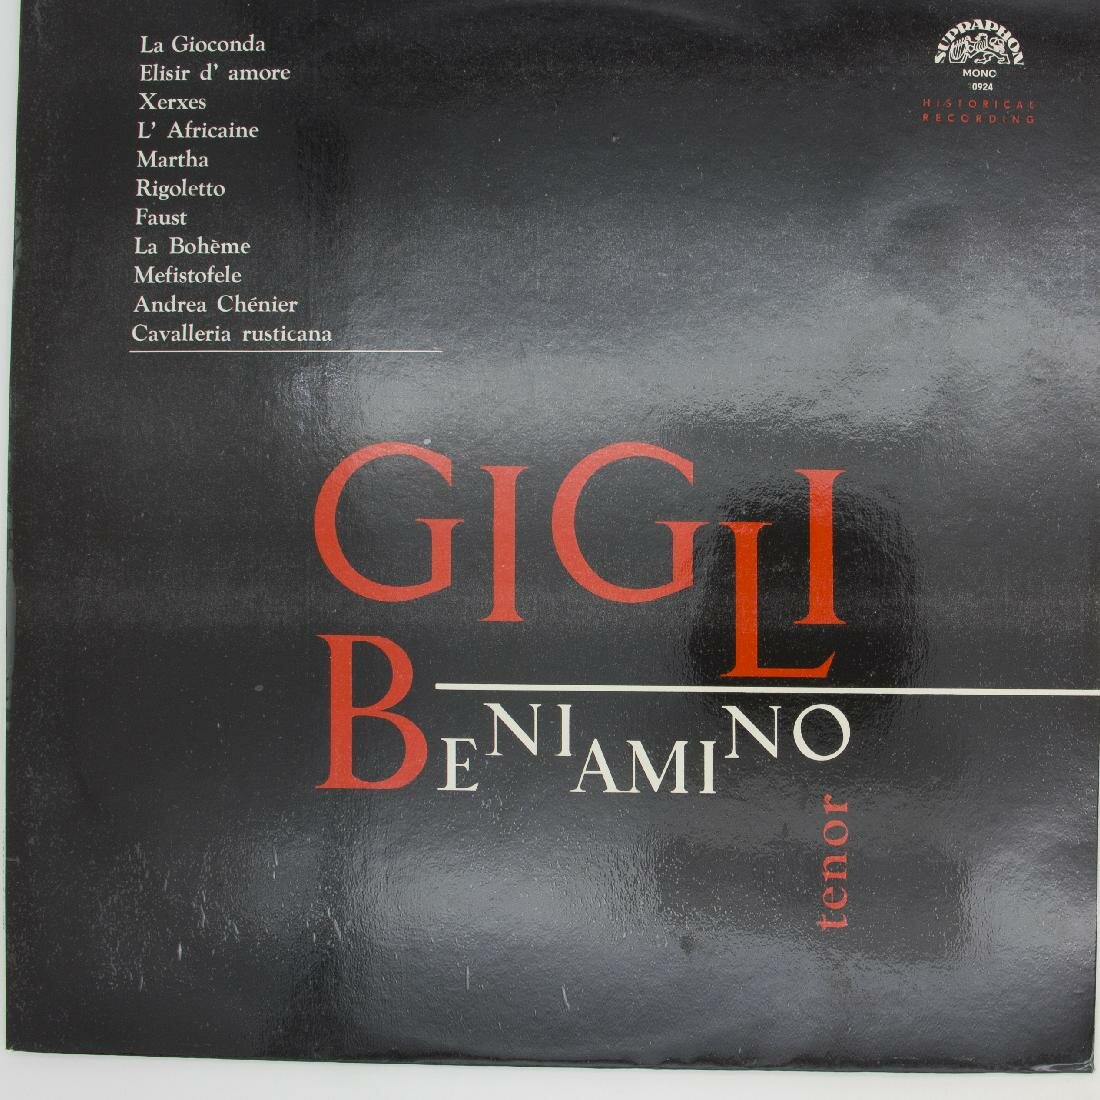 Виниловая пластинка Beniamino Gigli Беньямино Джильи - Reci